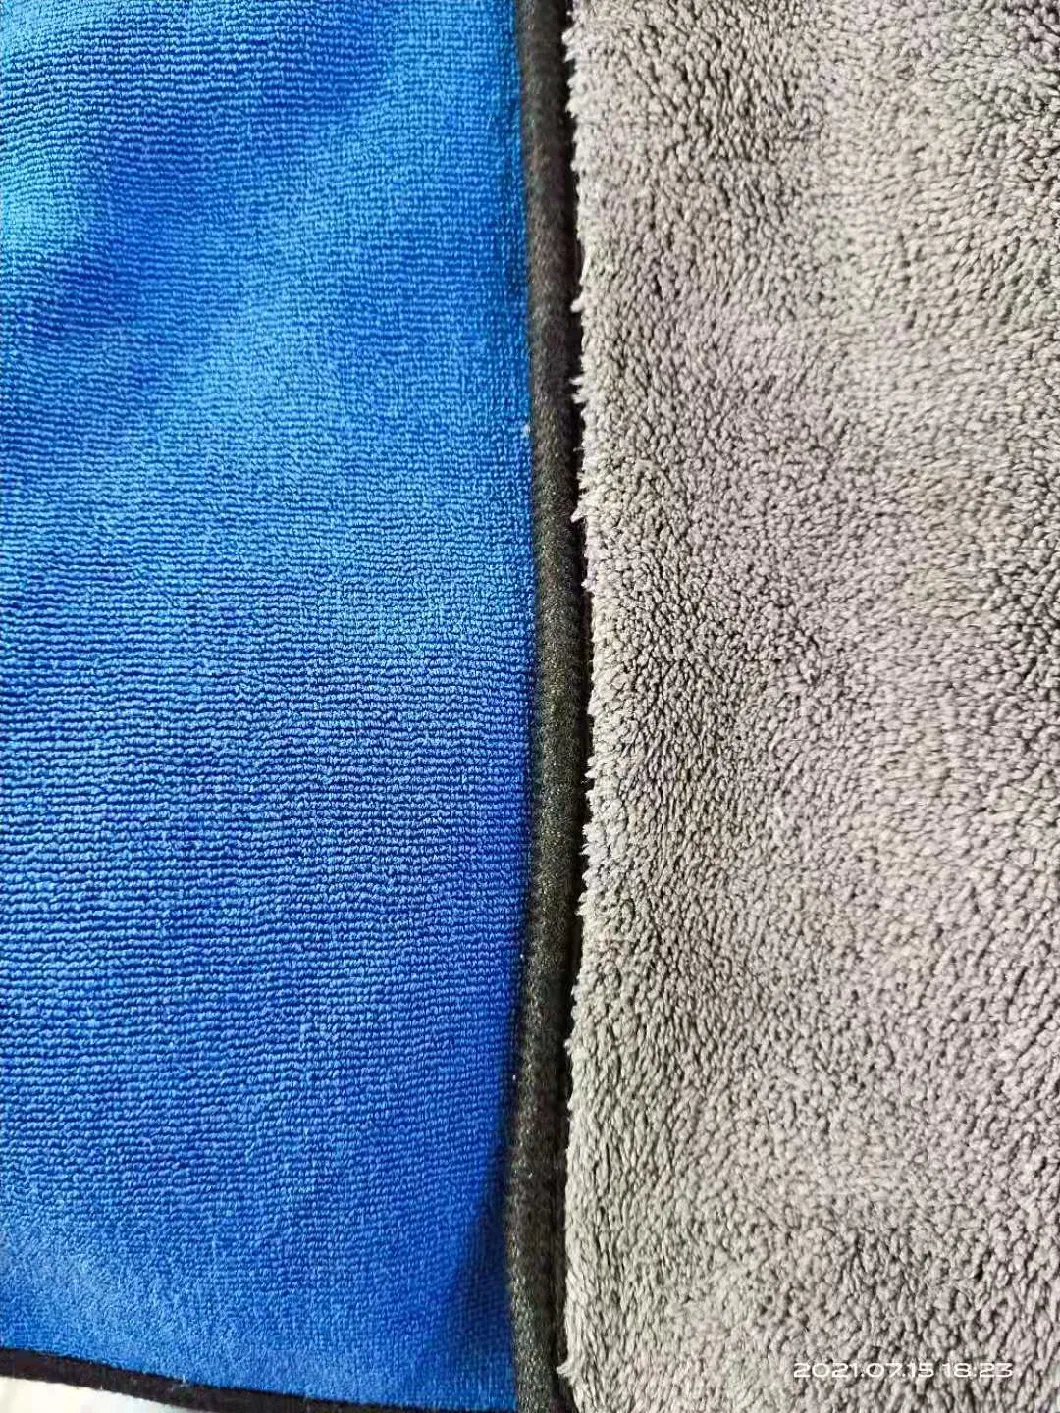 Double Towel Coral Fleece Warp and Weft Knitted Fiber Towel